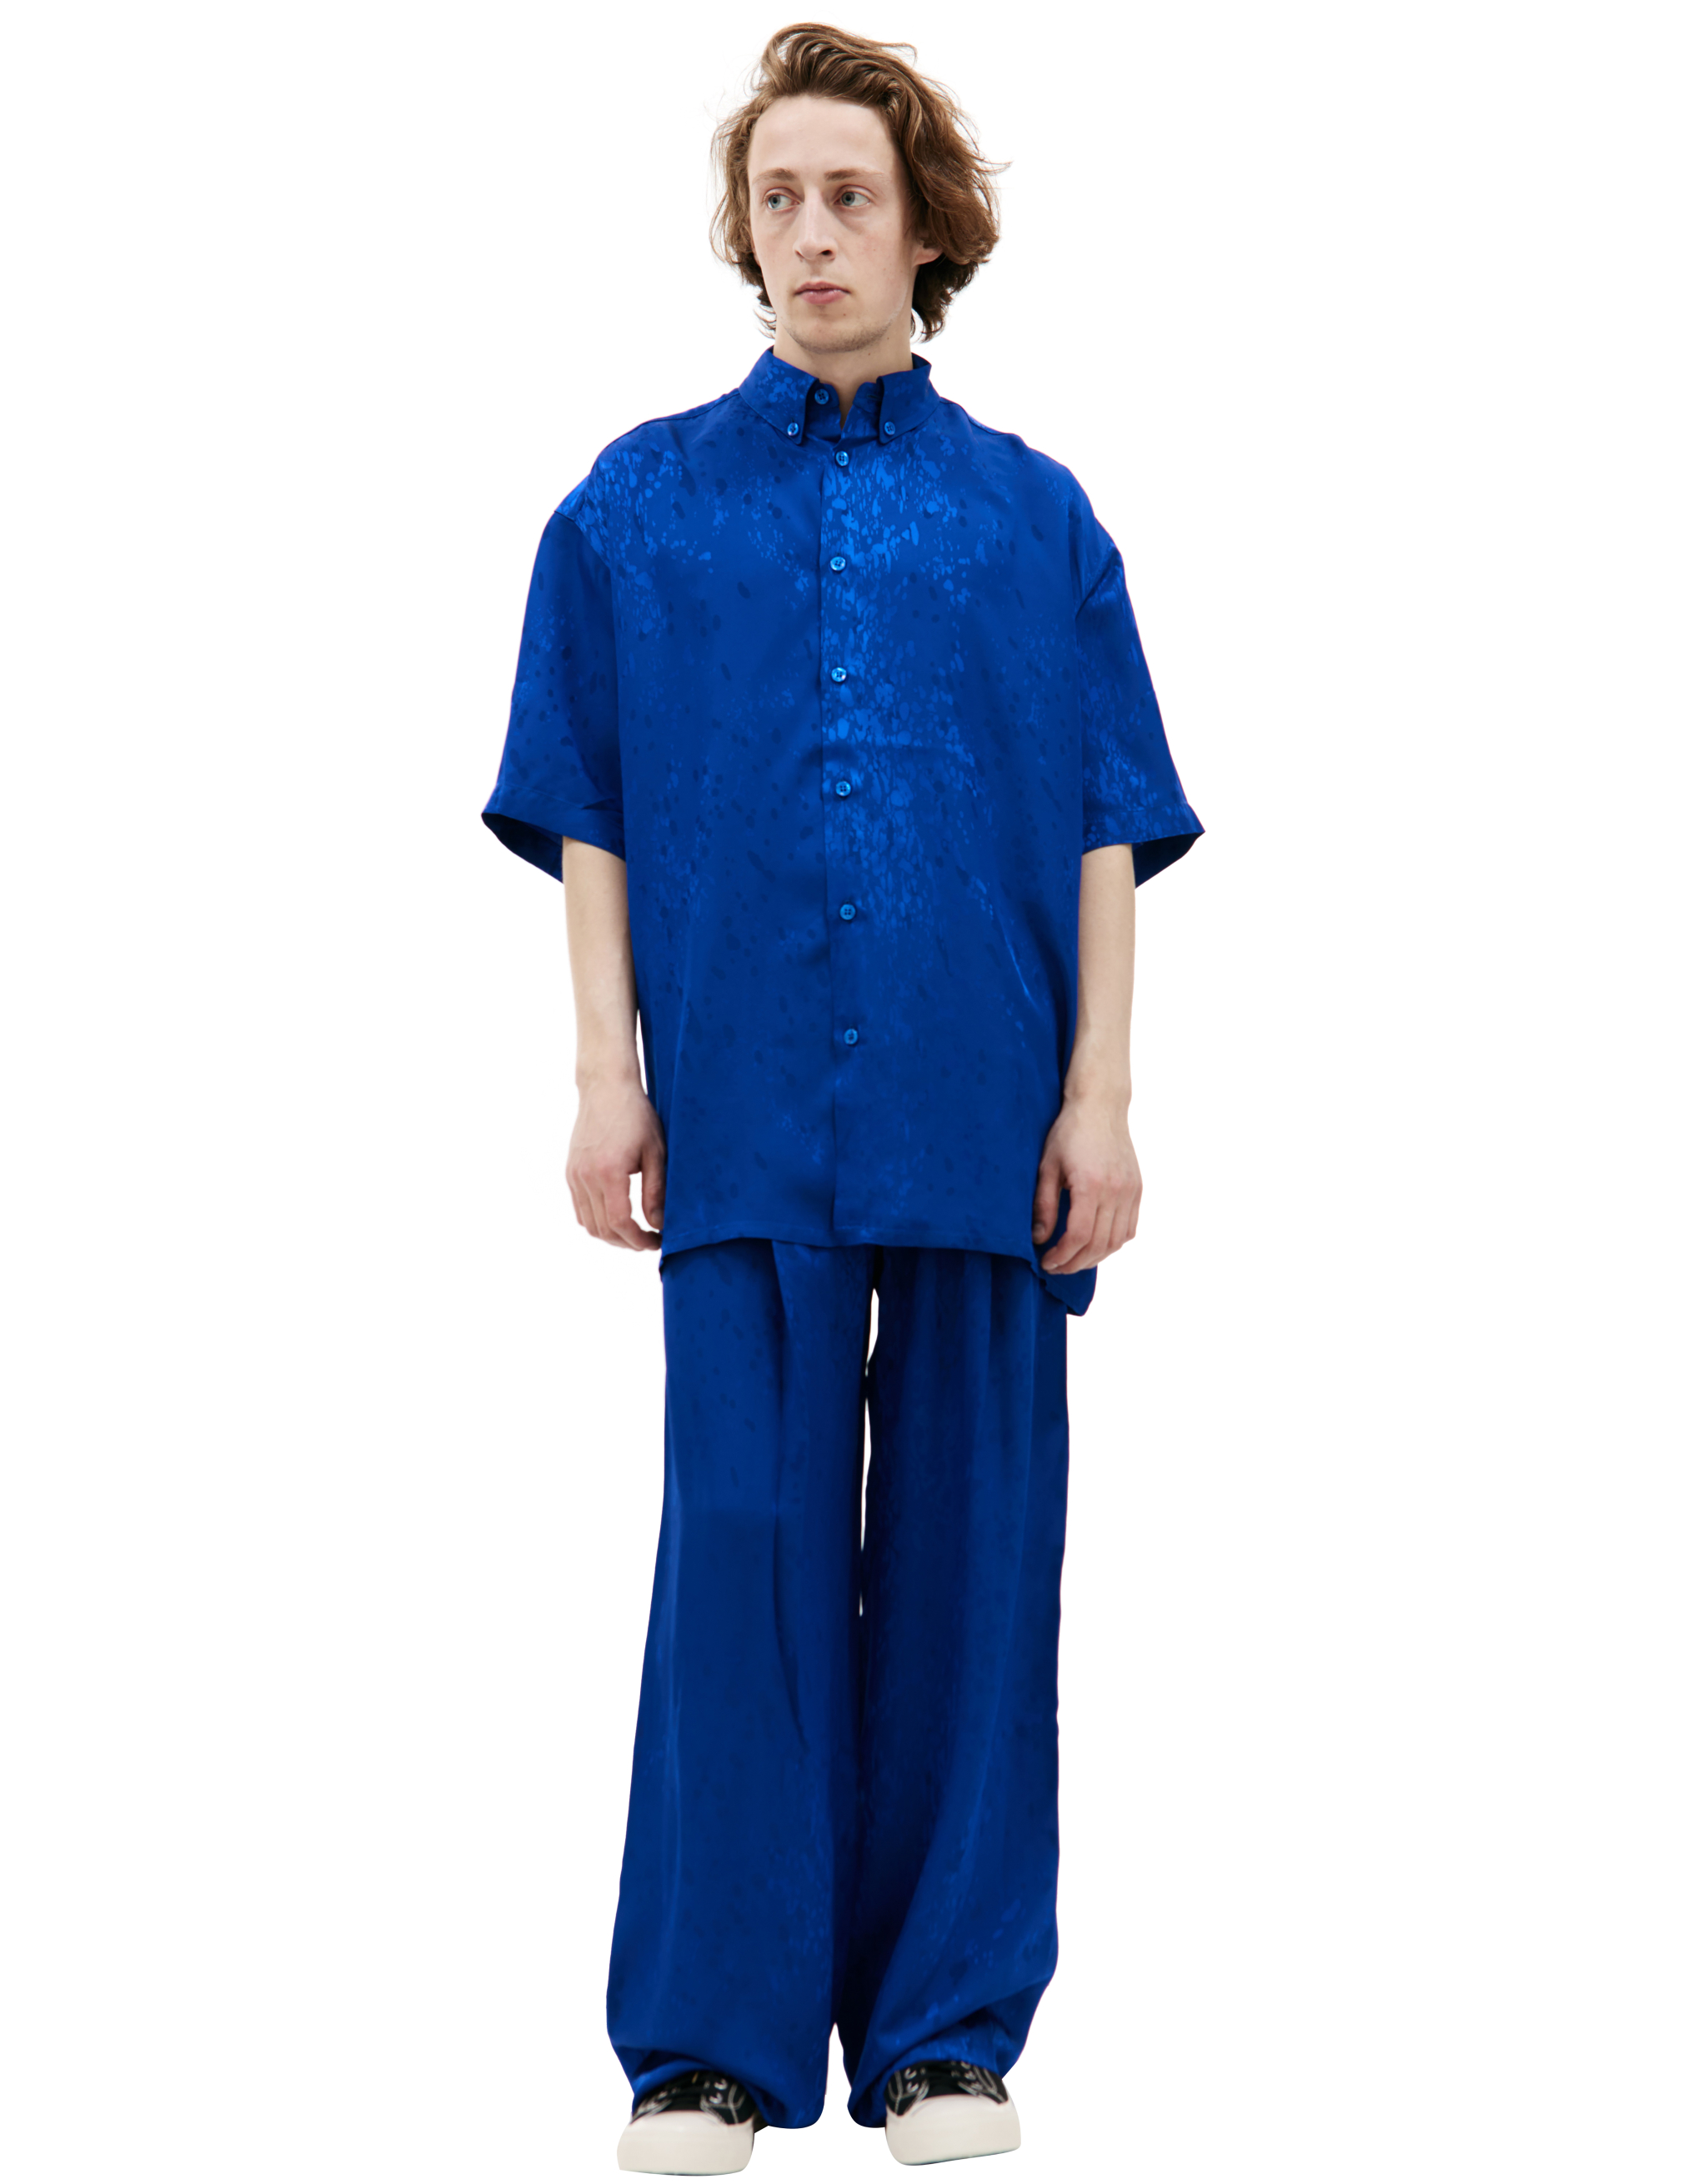 Синяя рубашка с короткими рукавами LOUIS GABRIEL NOUCHI 0531/T714/029, размер M;XL